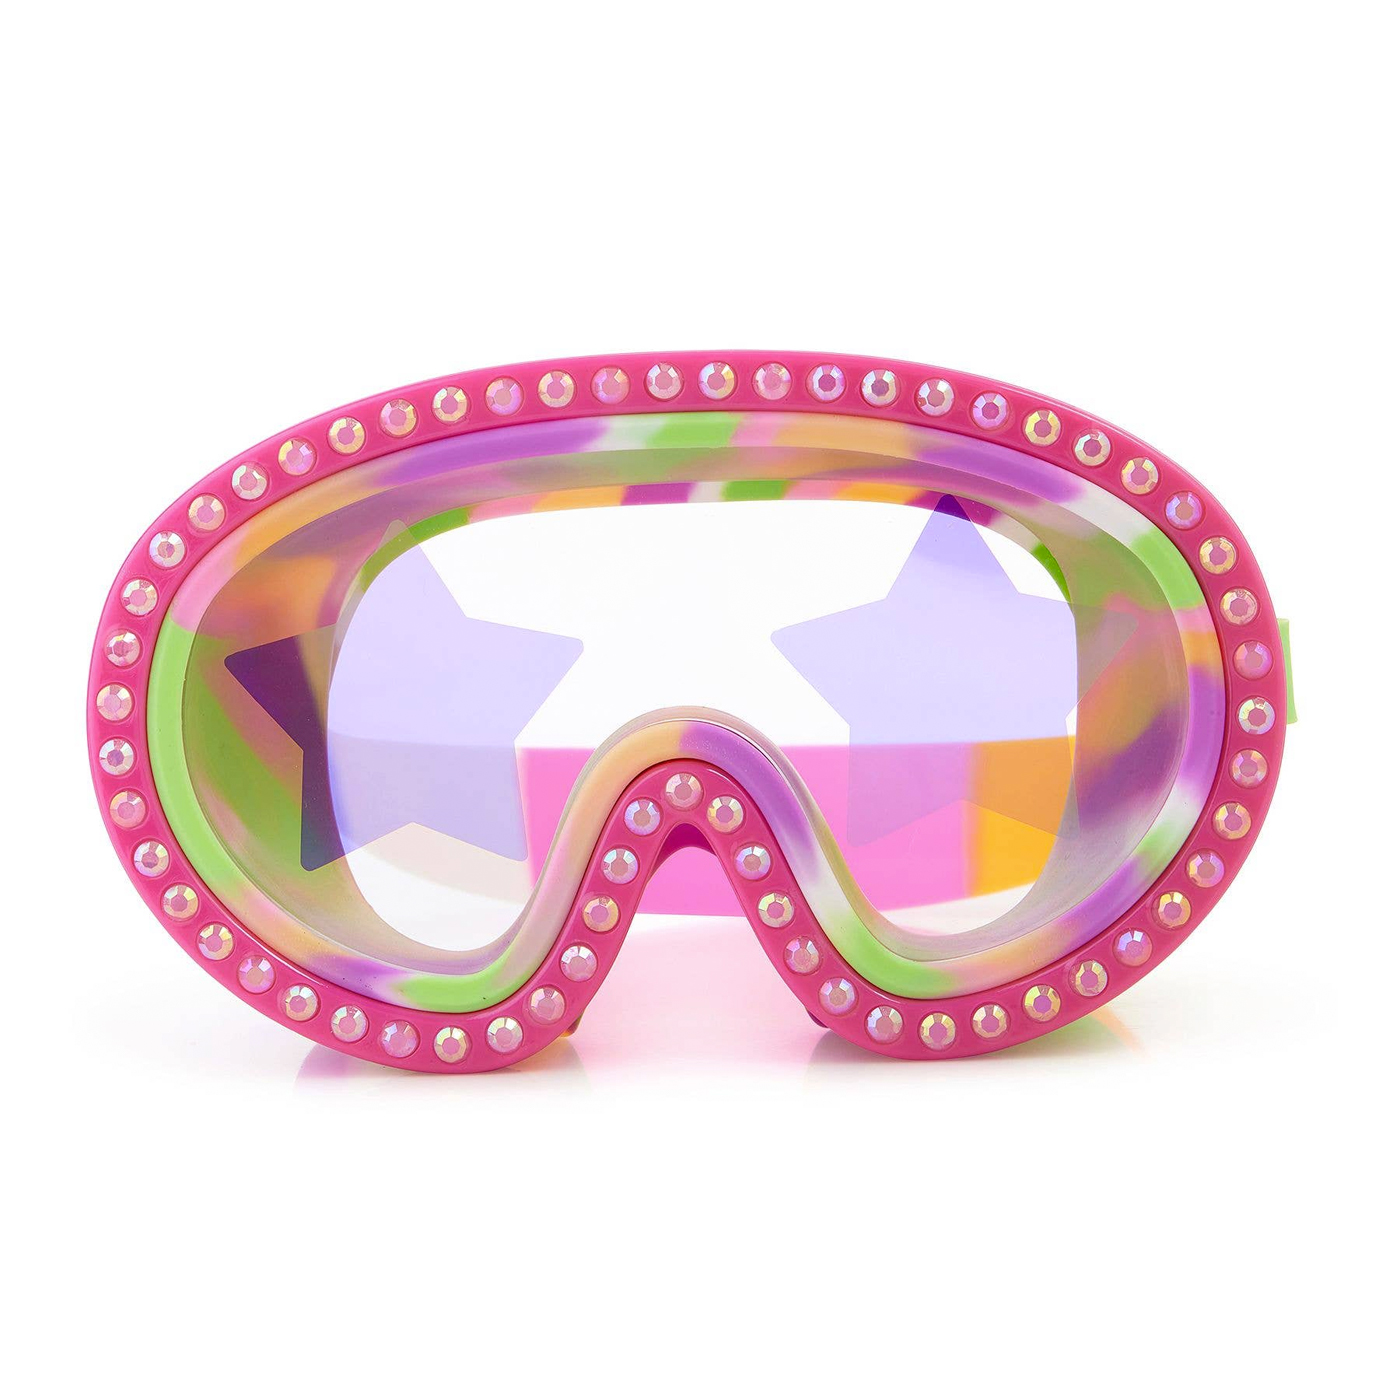  Bling2o Star Glitter Deniz Gözlüğü  | Pink Star